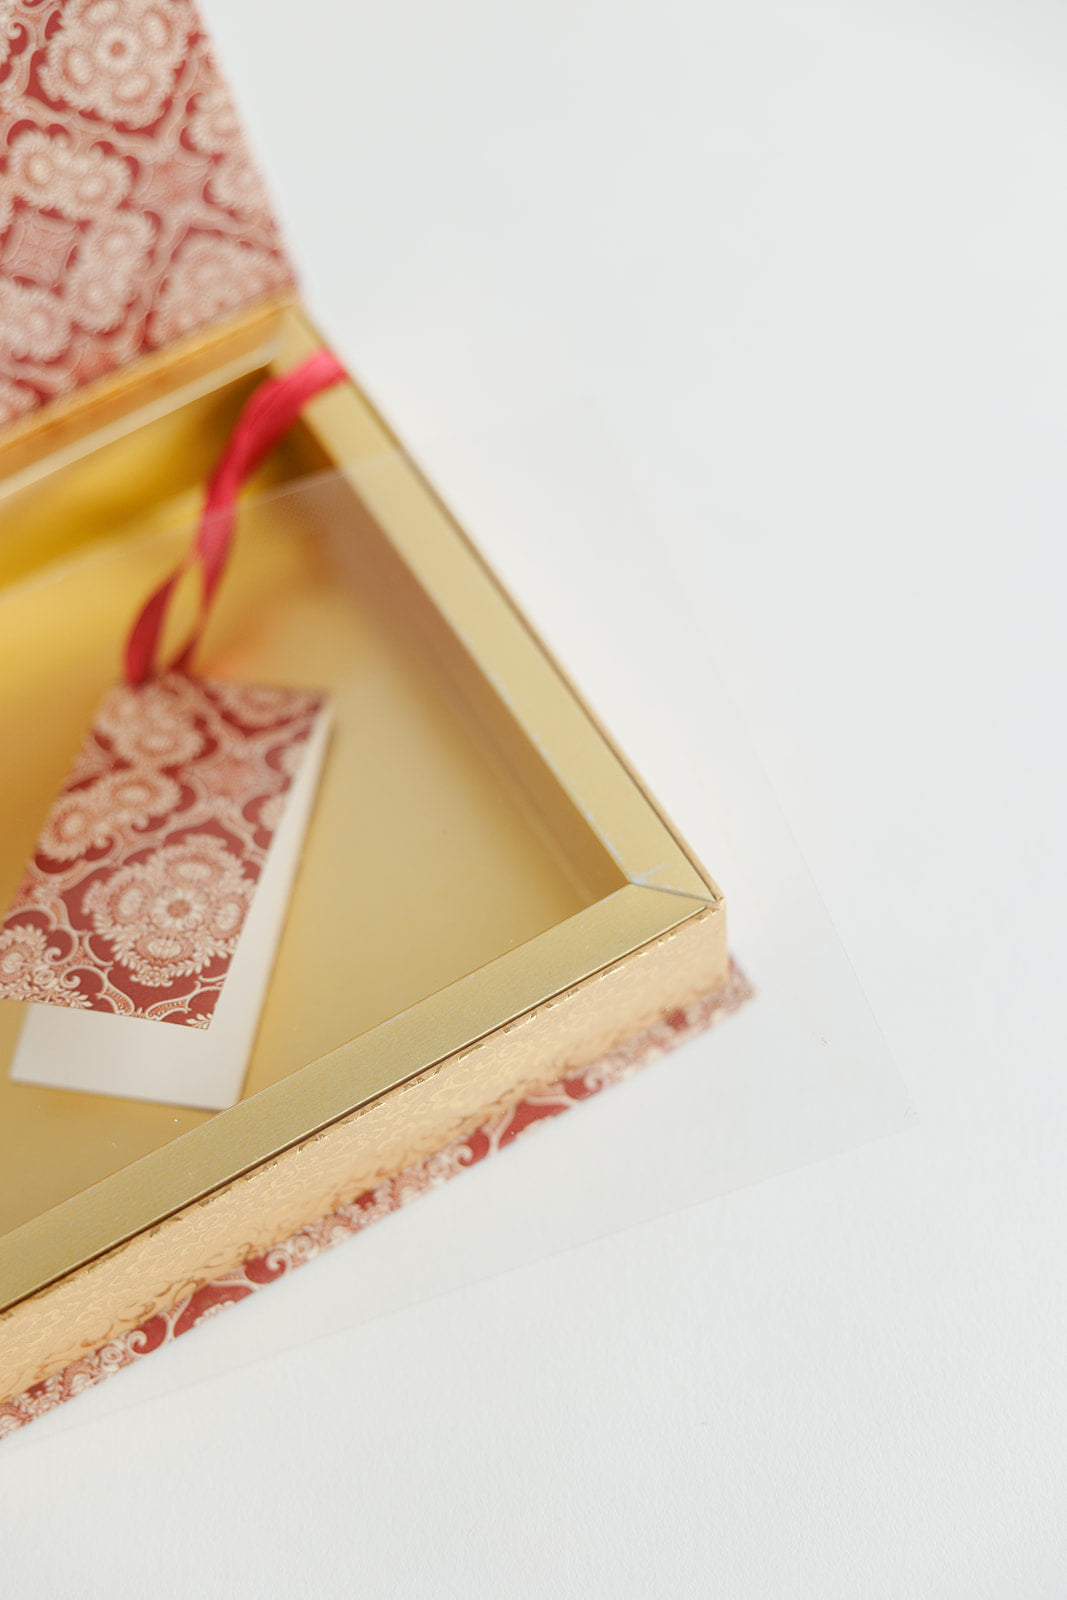 Luxury Printed Brown Gift Box